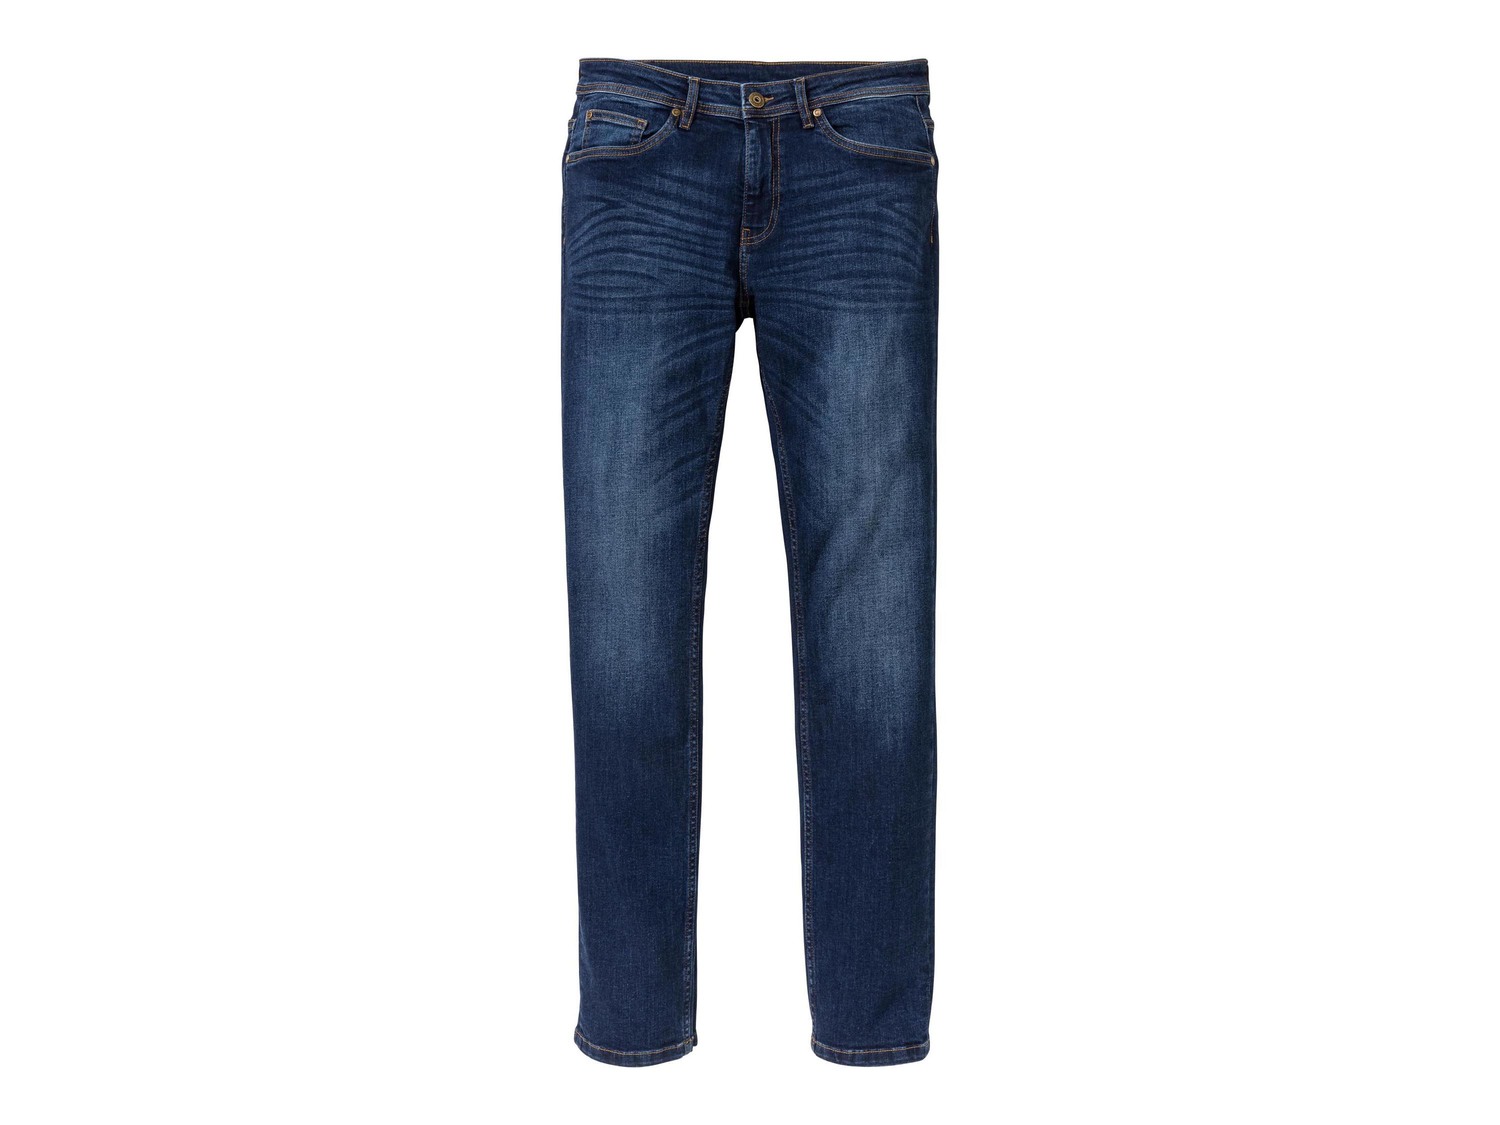 Jeans Slim Fit o Straight Fit Livergy, prezzo 9.99 &#8364; 
Misure: 46-56
- ...